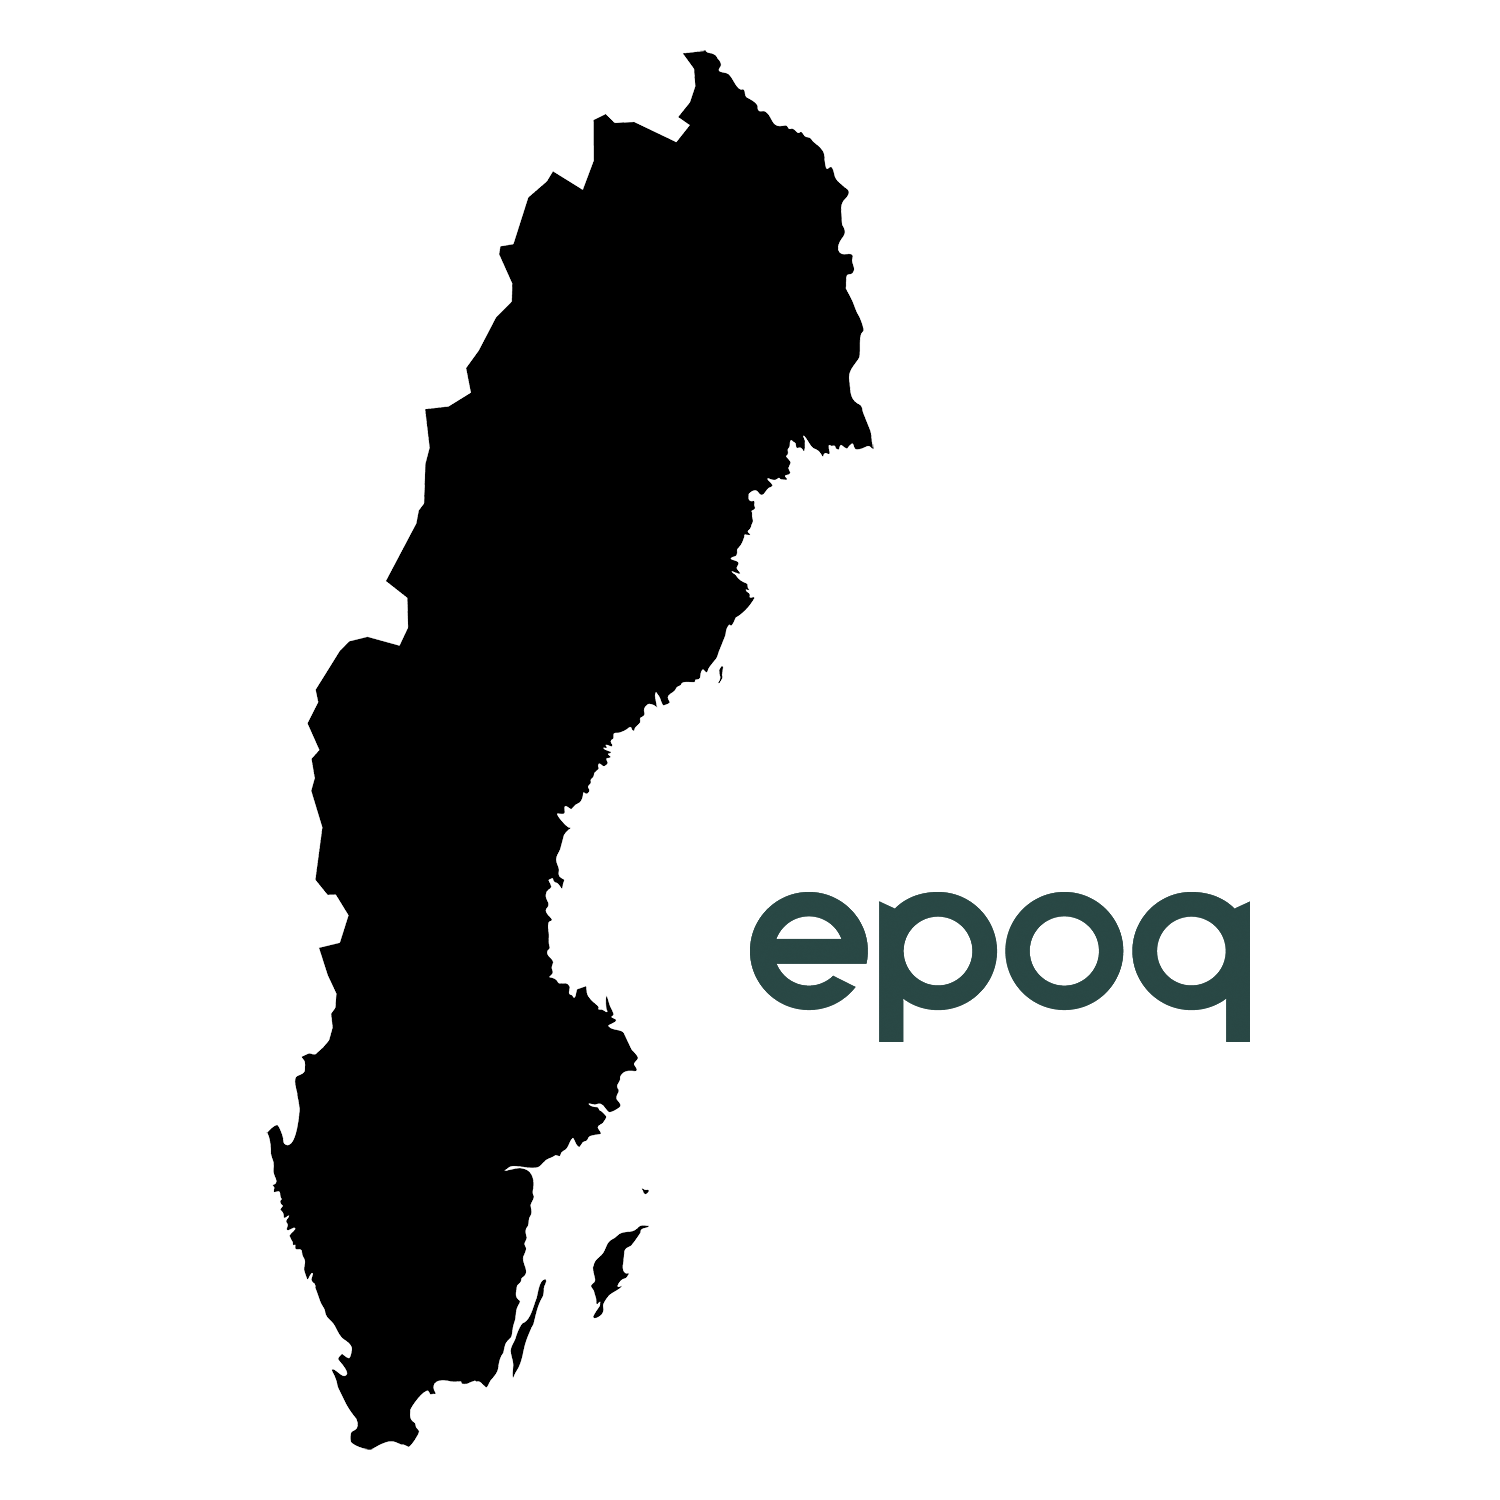 Sverigekarta med Epoq-logga